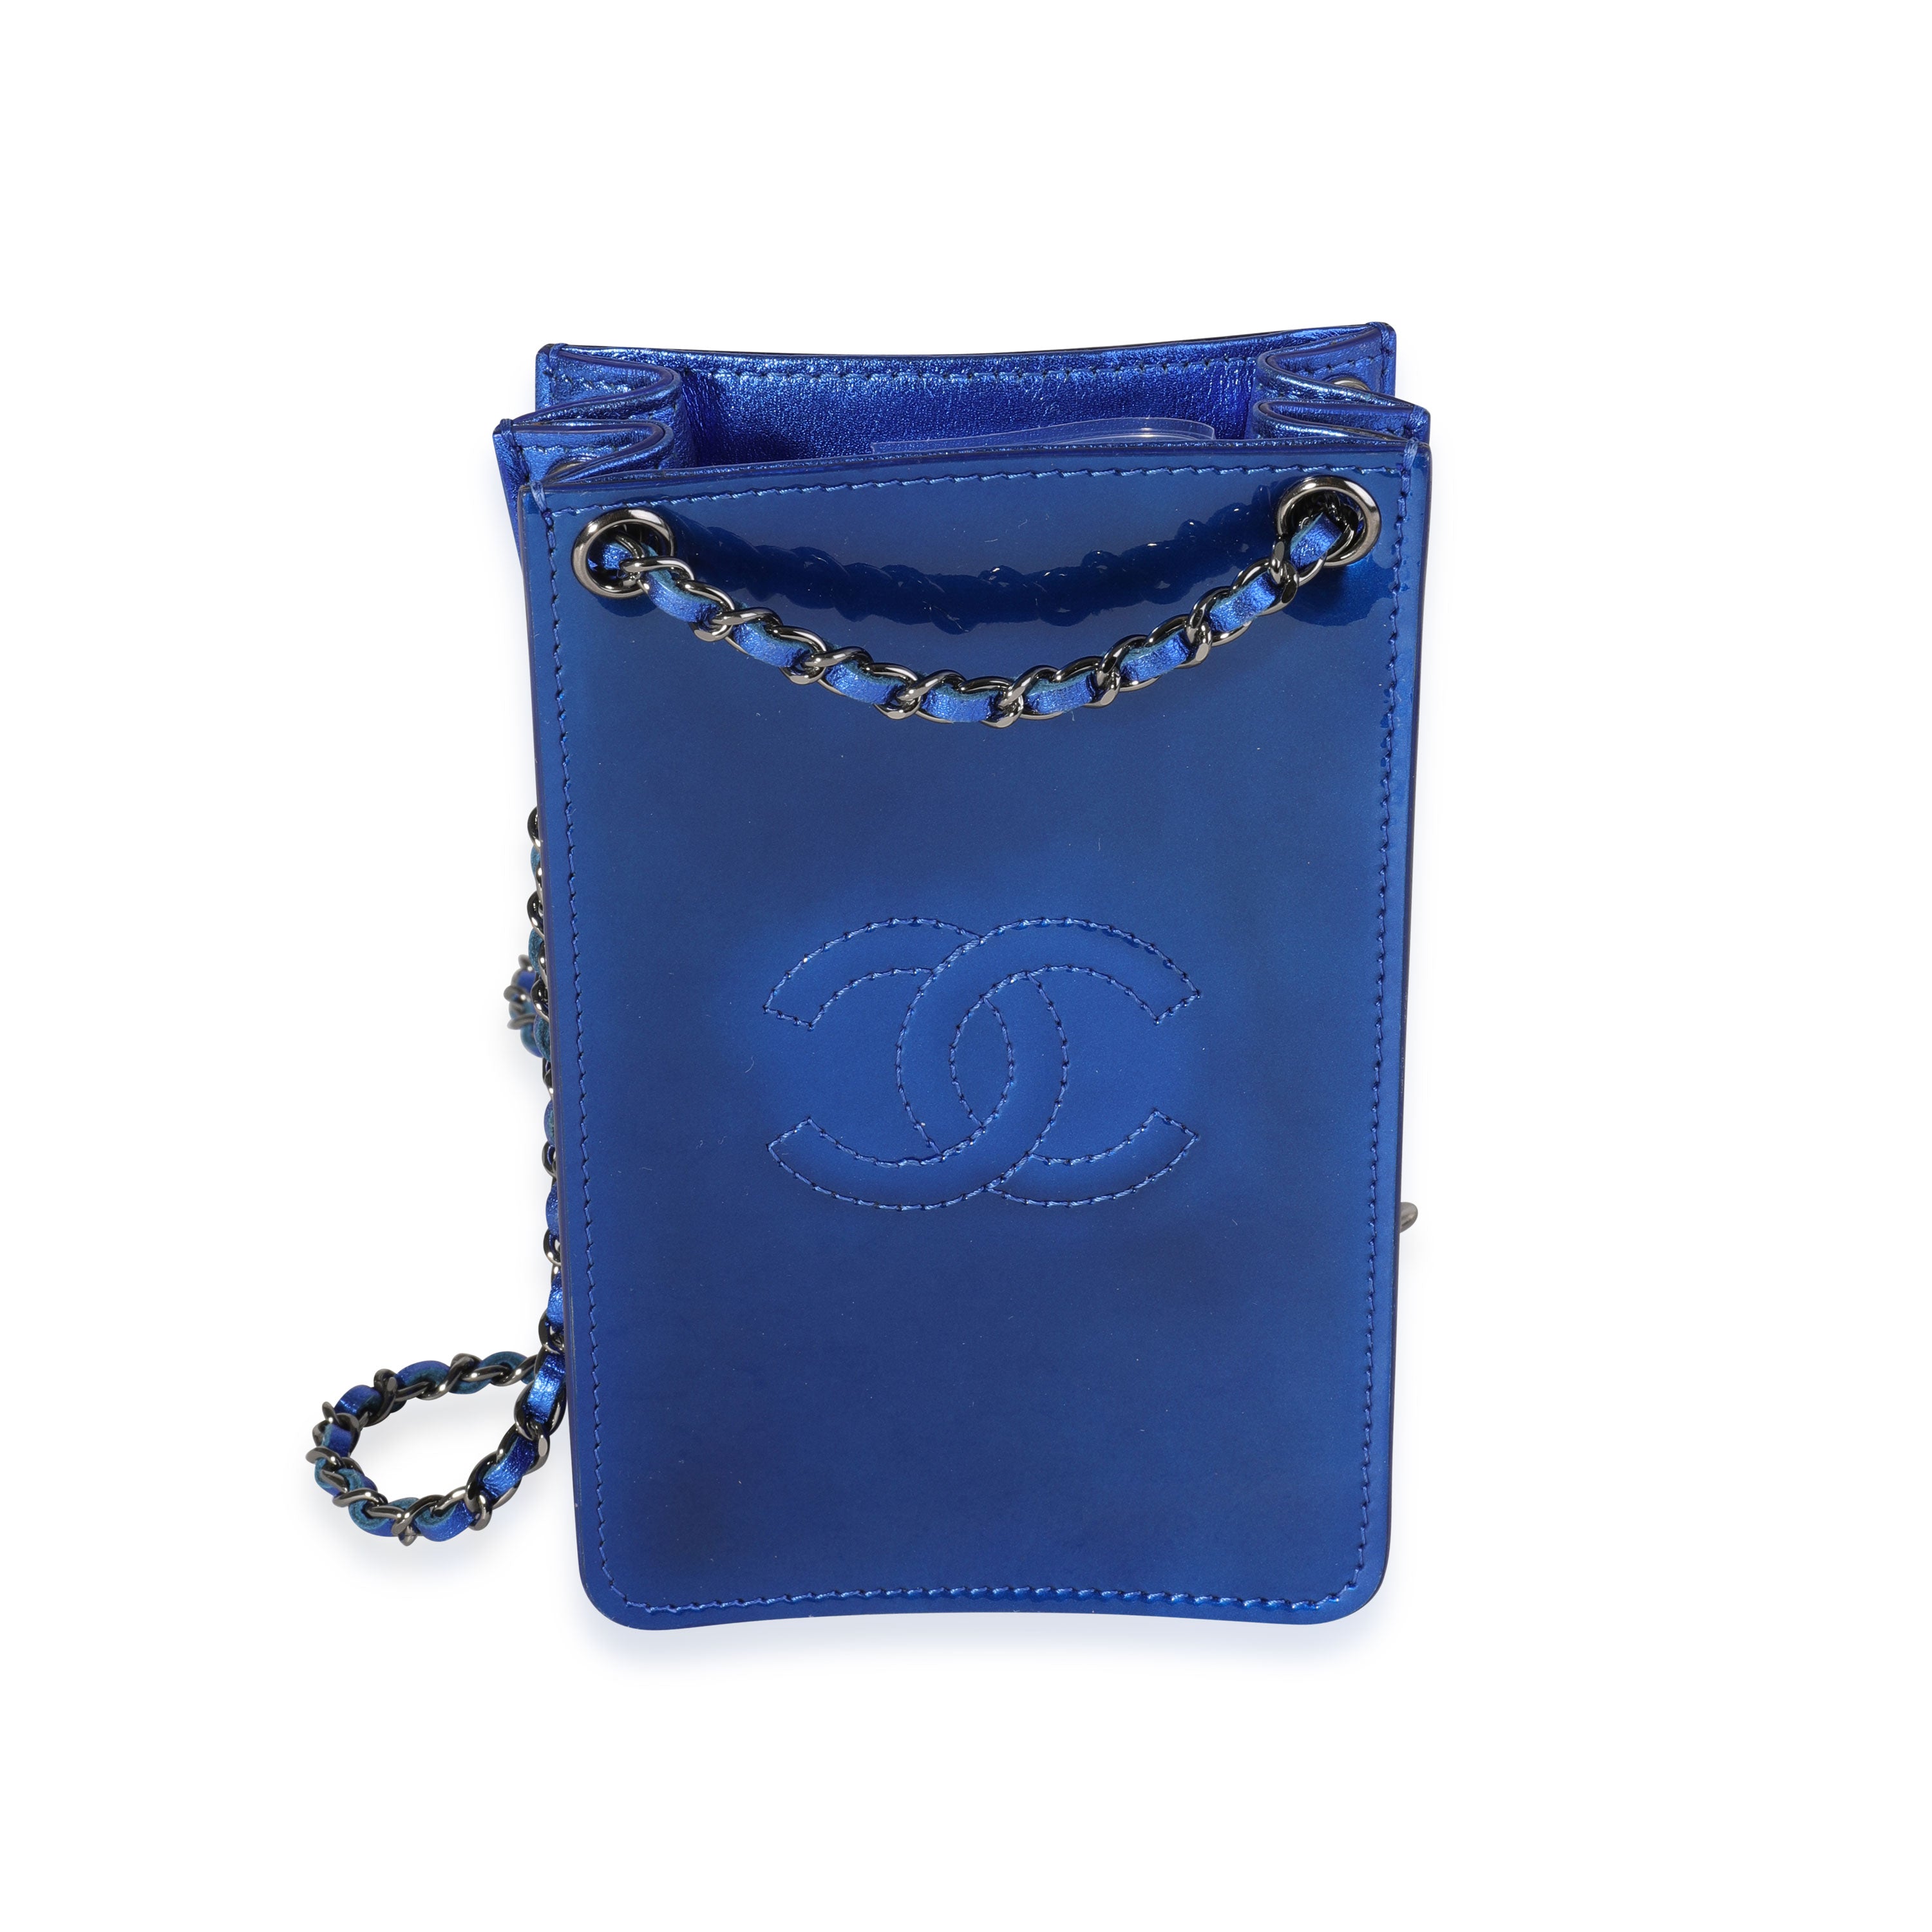 Chanel Metallic Blue Caviar Leather Medium CC Zip Around Wallet Chanel